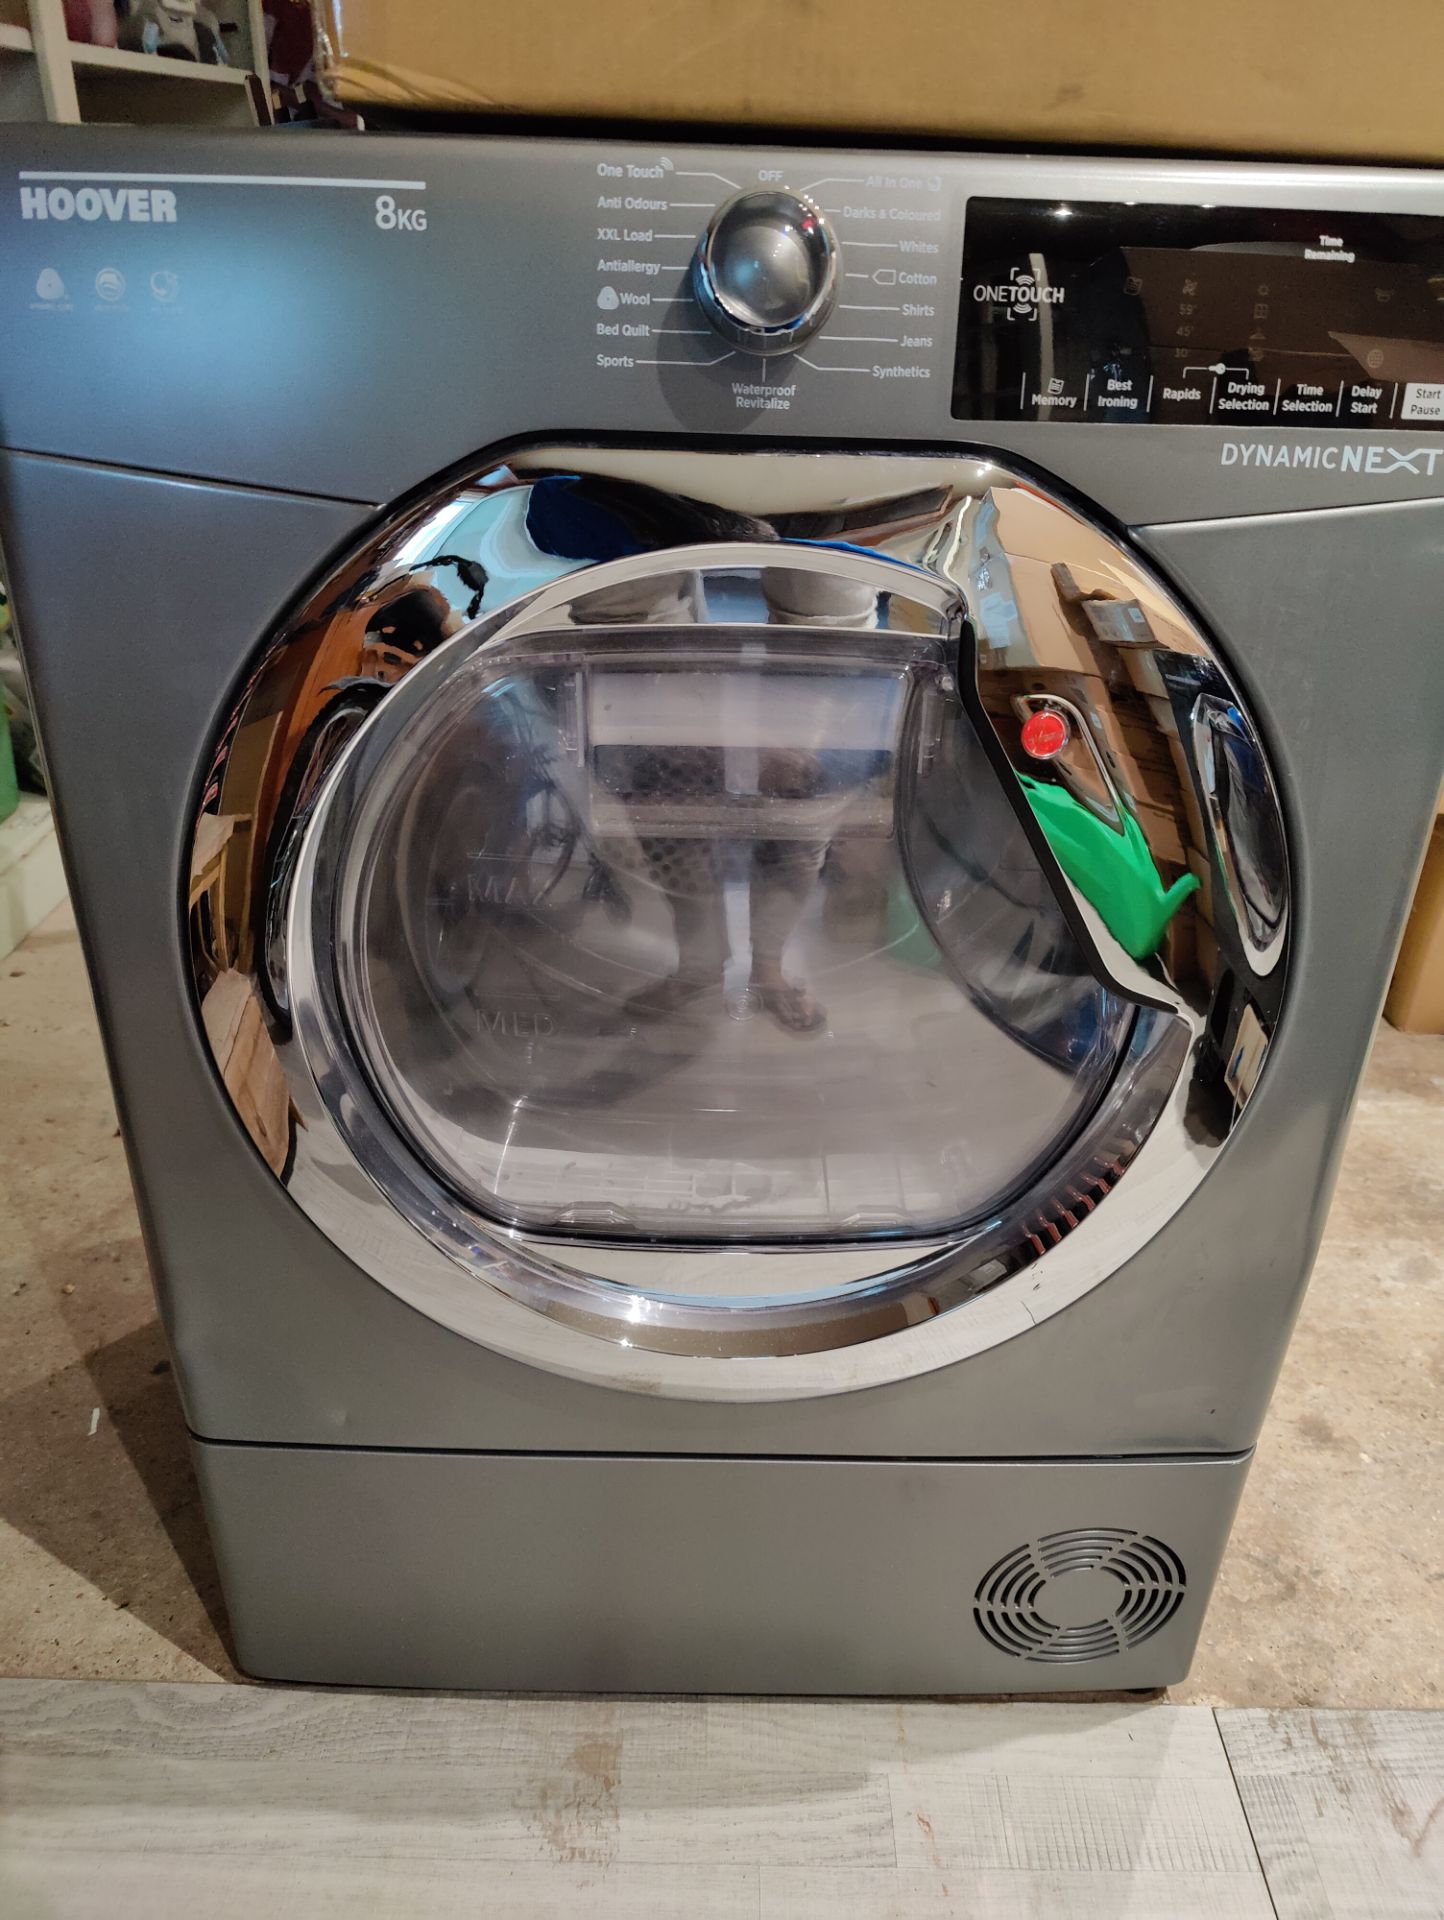 2 x Hoover Dynamic Dryers (8kg & 9 Kg) - Image 2 of 2